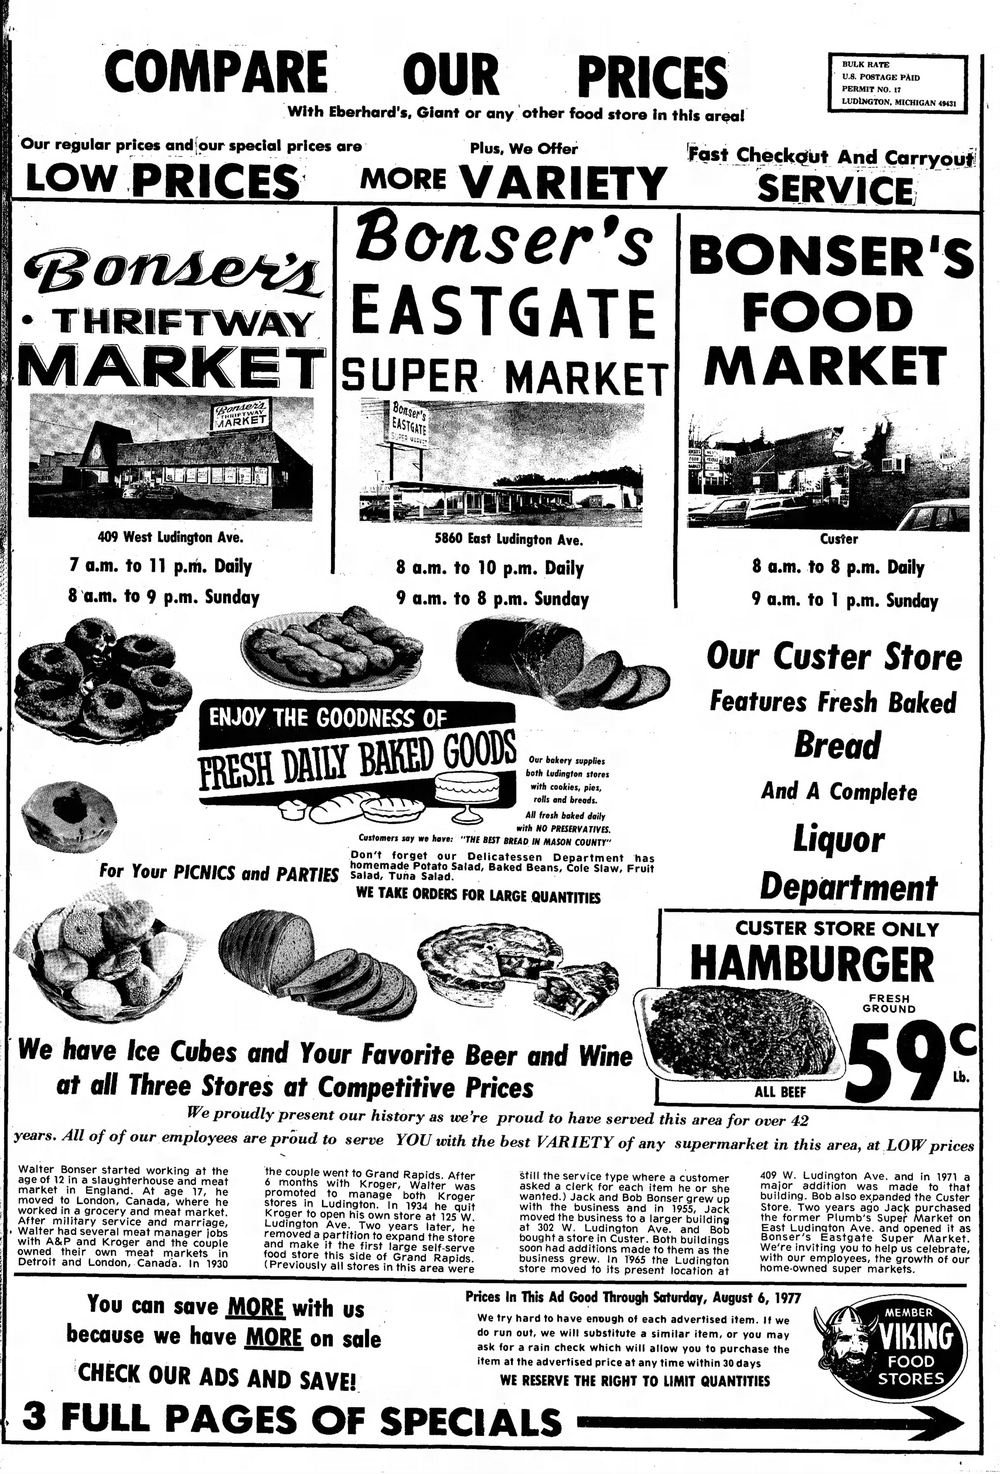 Plumbs Supermarket - Aug 2 1977 Article On Bonsers